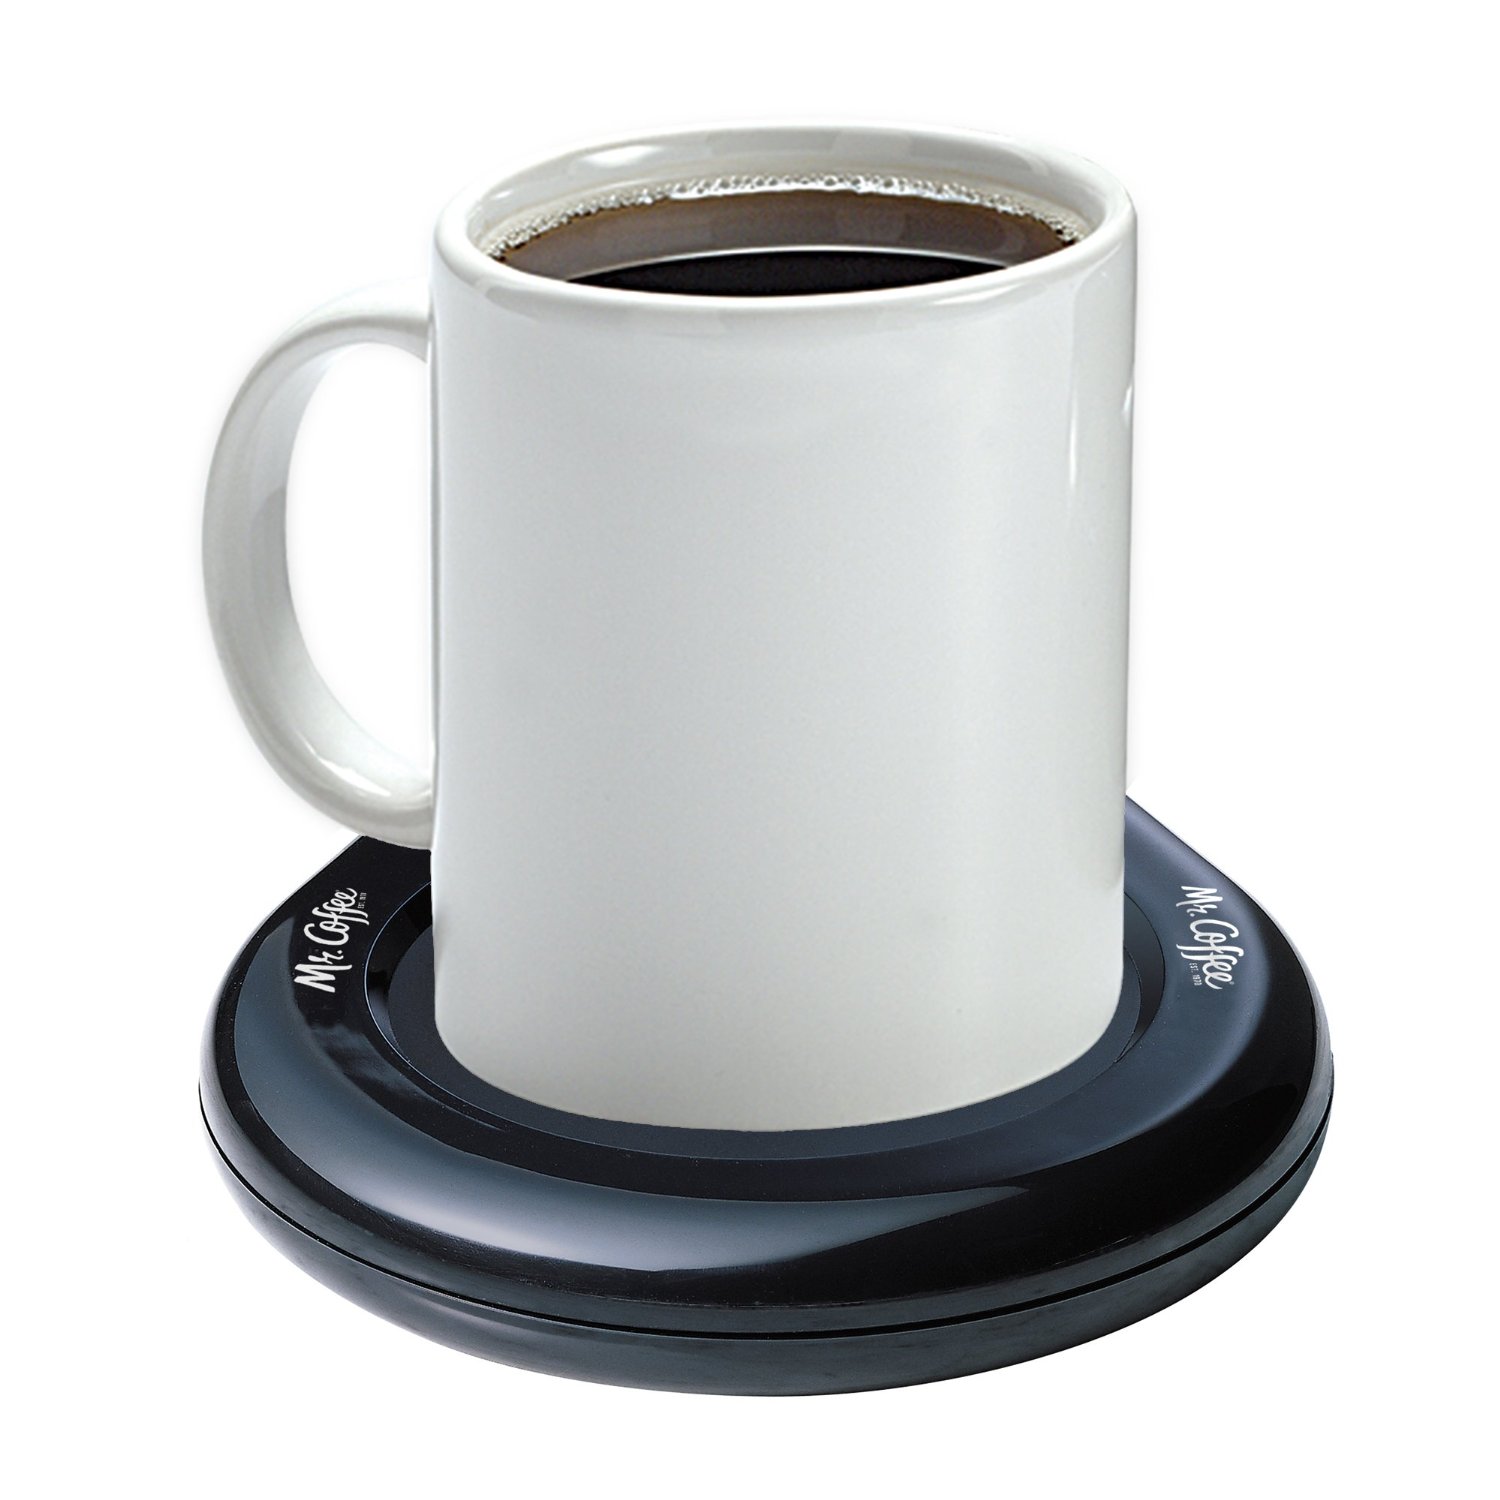 Coffee Mug Warmer, Electric Beverage Warmers for Office Home Desk